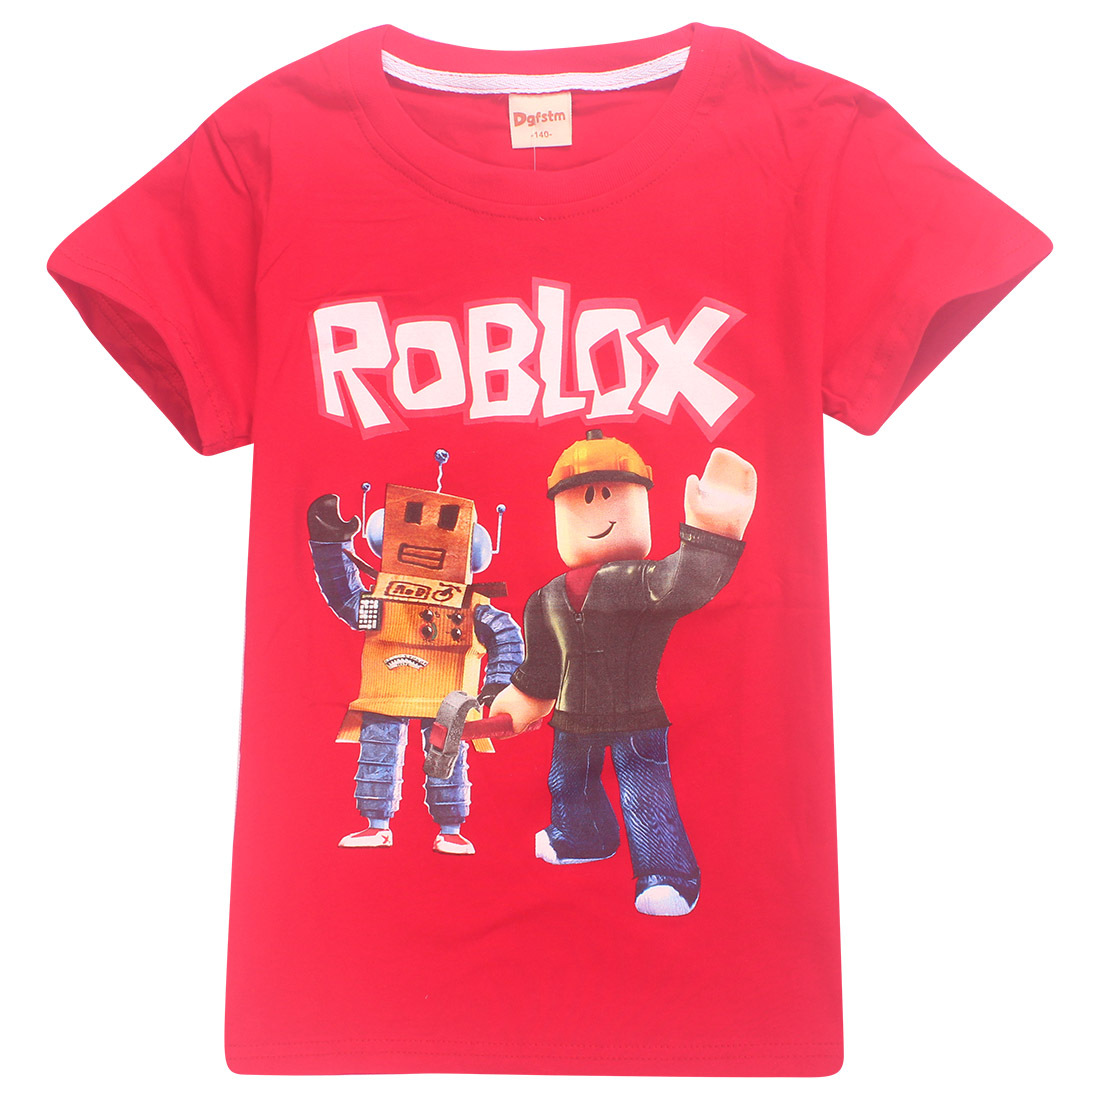 Roblox T Shirts For Kids Eyegemix Com - roblox stranger things clothes